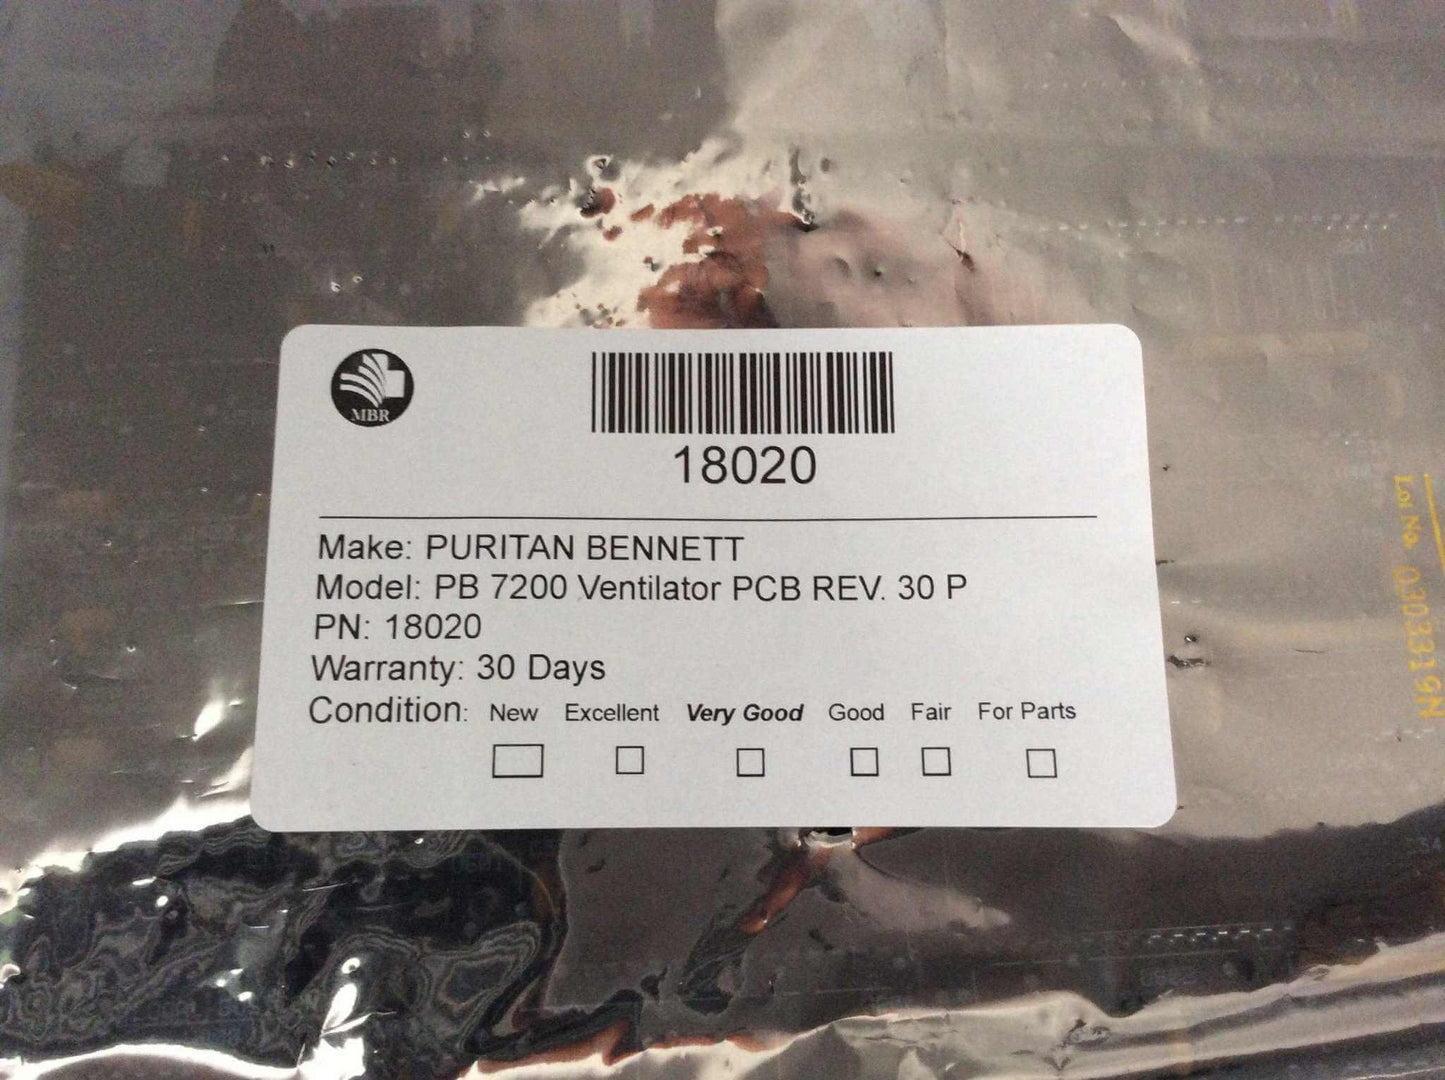 USED Puritan Bennett 7200 Covidien Ventilator PCB Board Parts REV 30 18020 Warranty FREE Shipping - MBR Medicals